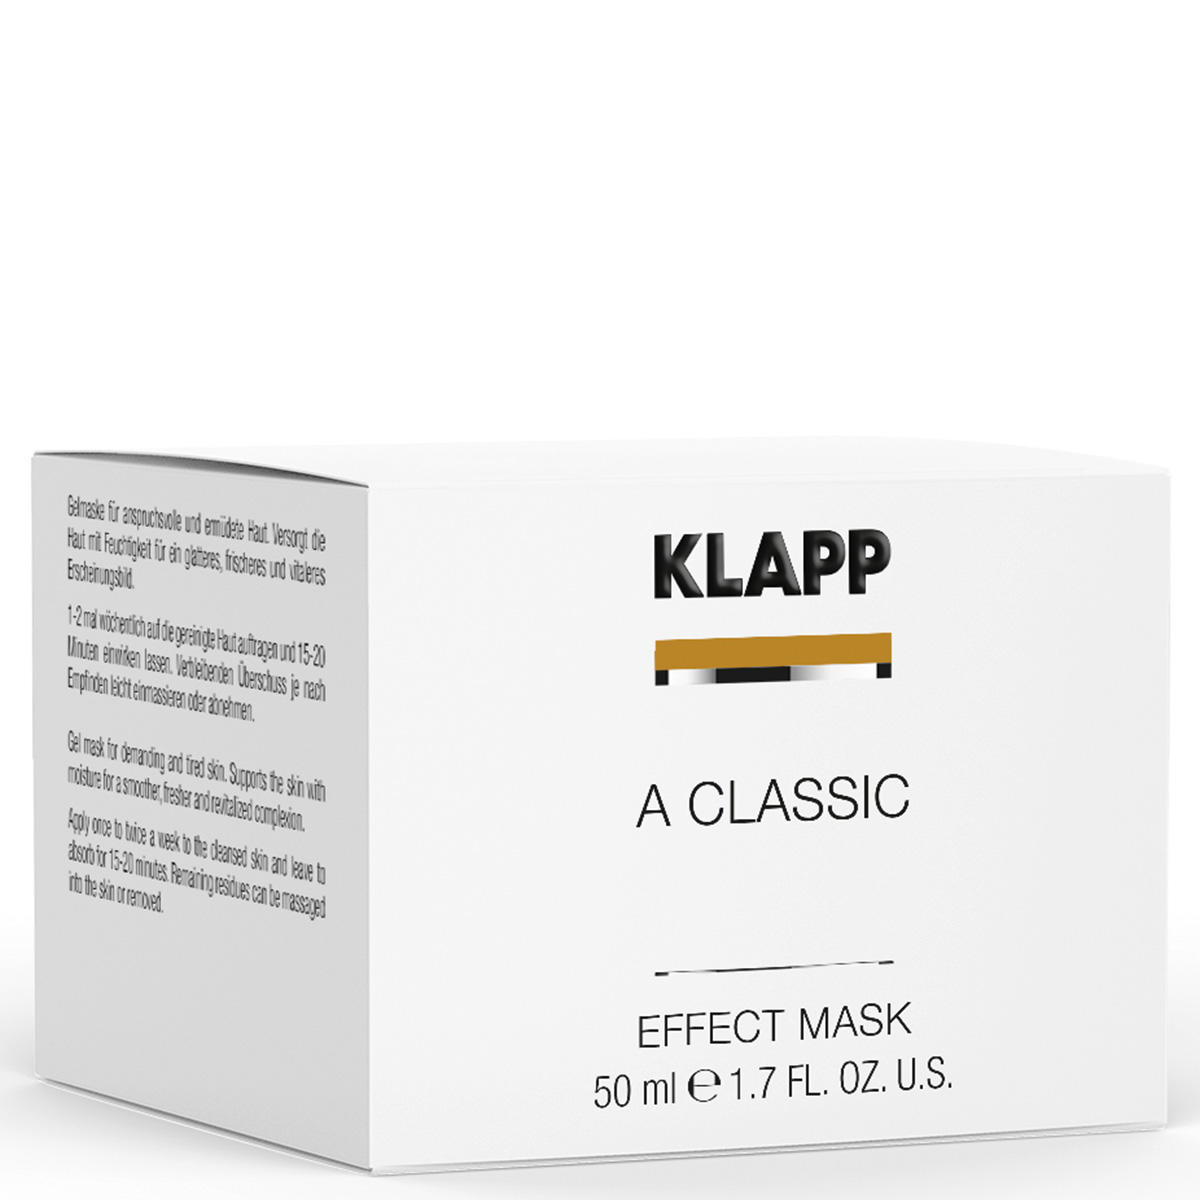 KLAPP A CLASSIC Effect Mask 50 ml - 2